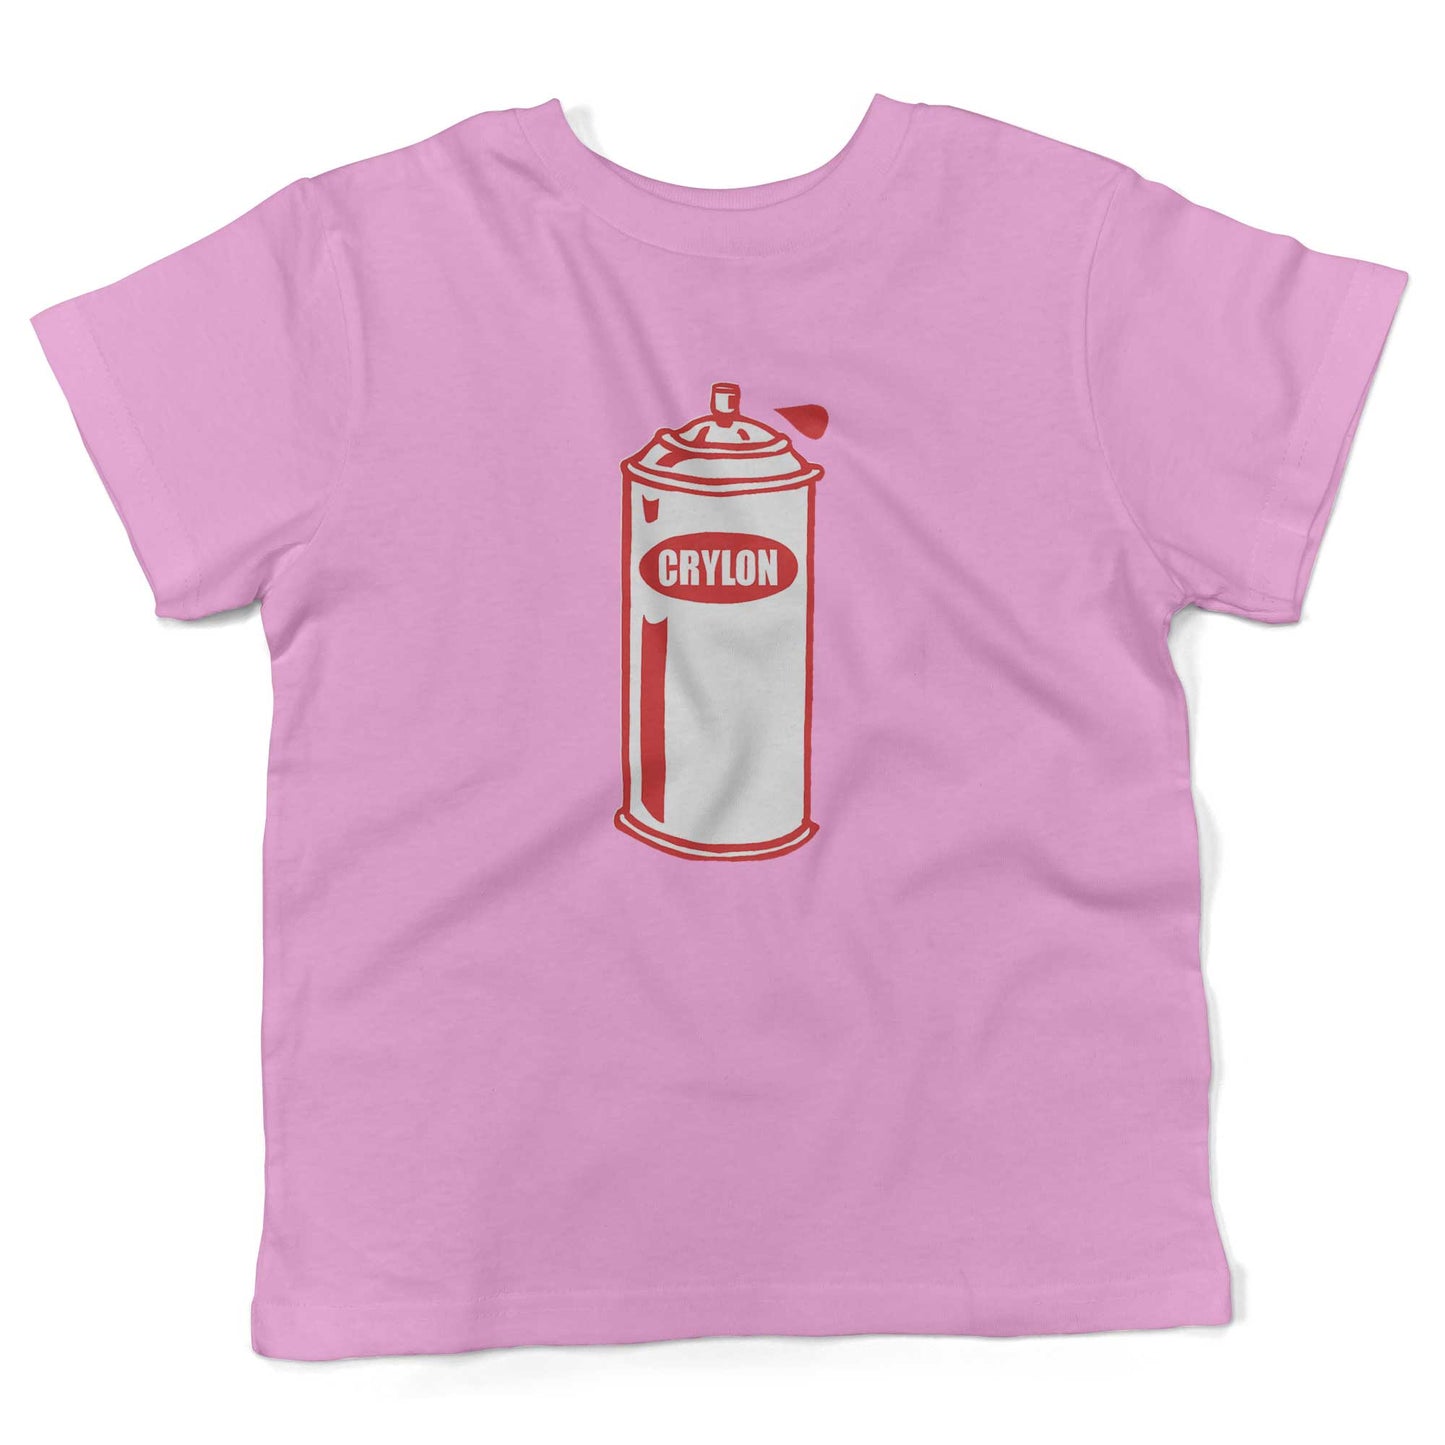 Crylon Cans Toddler Shirt-Organic Pink-2T